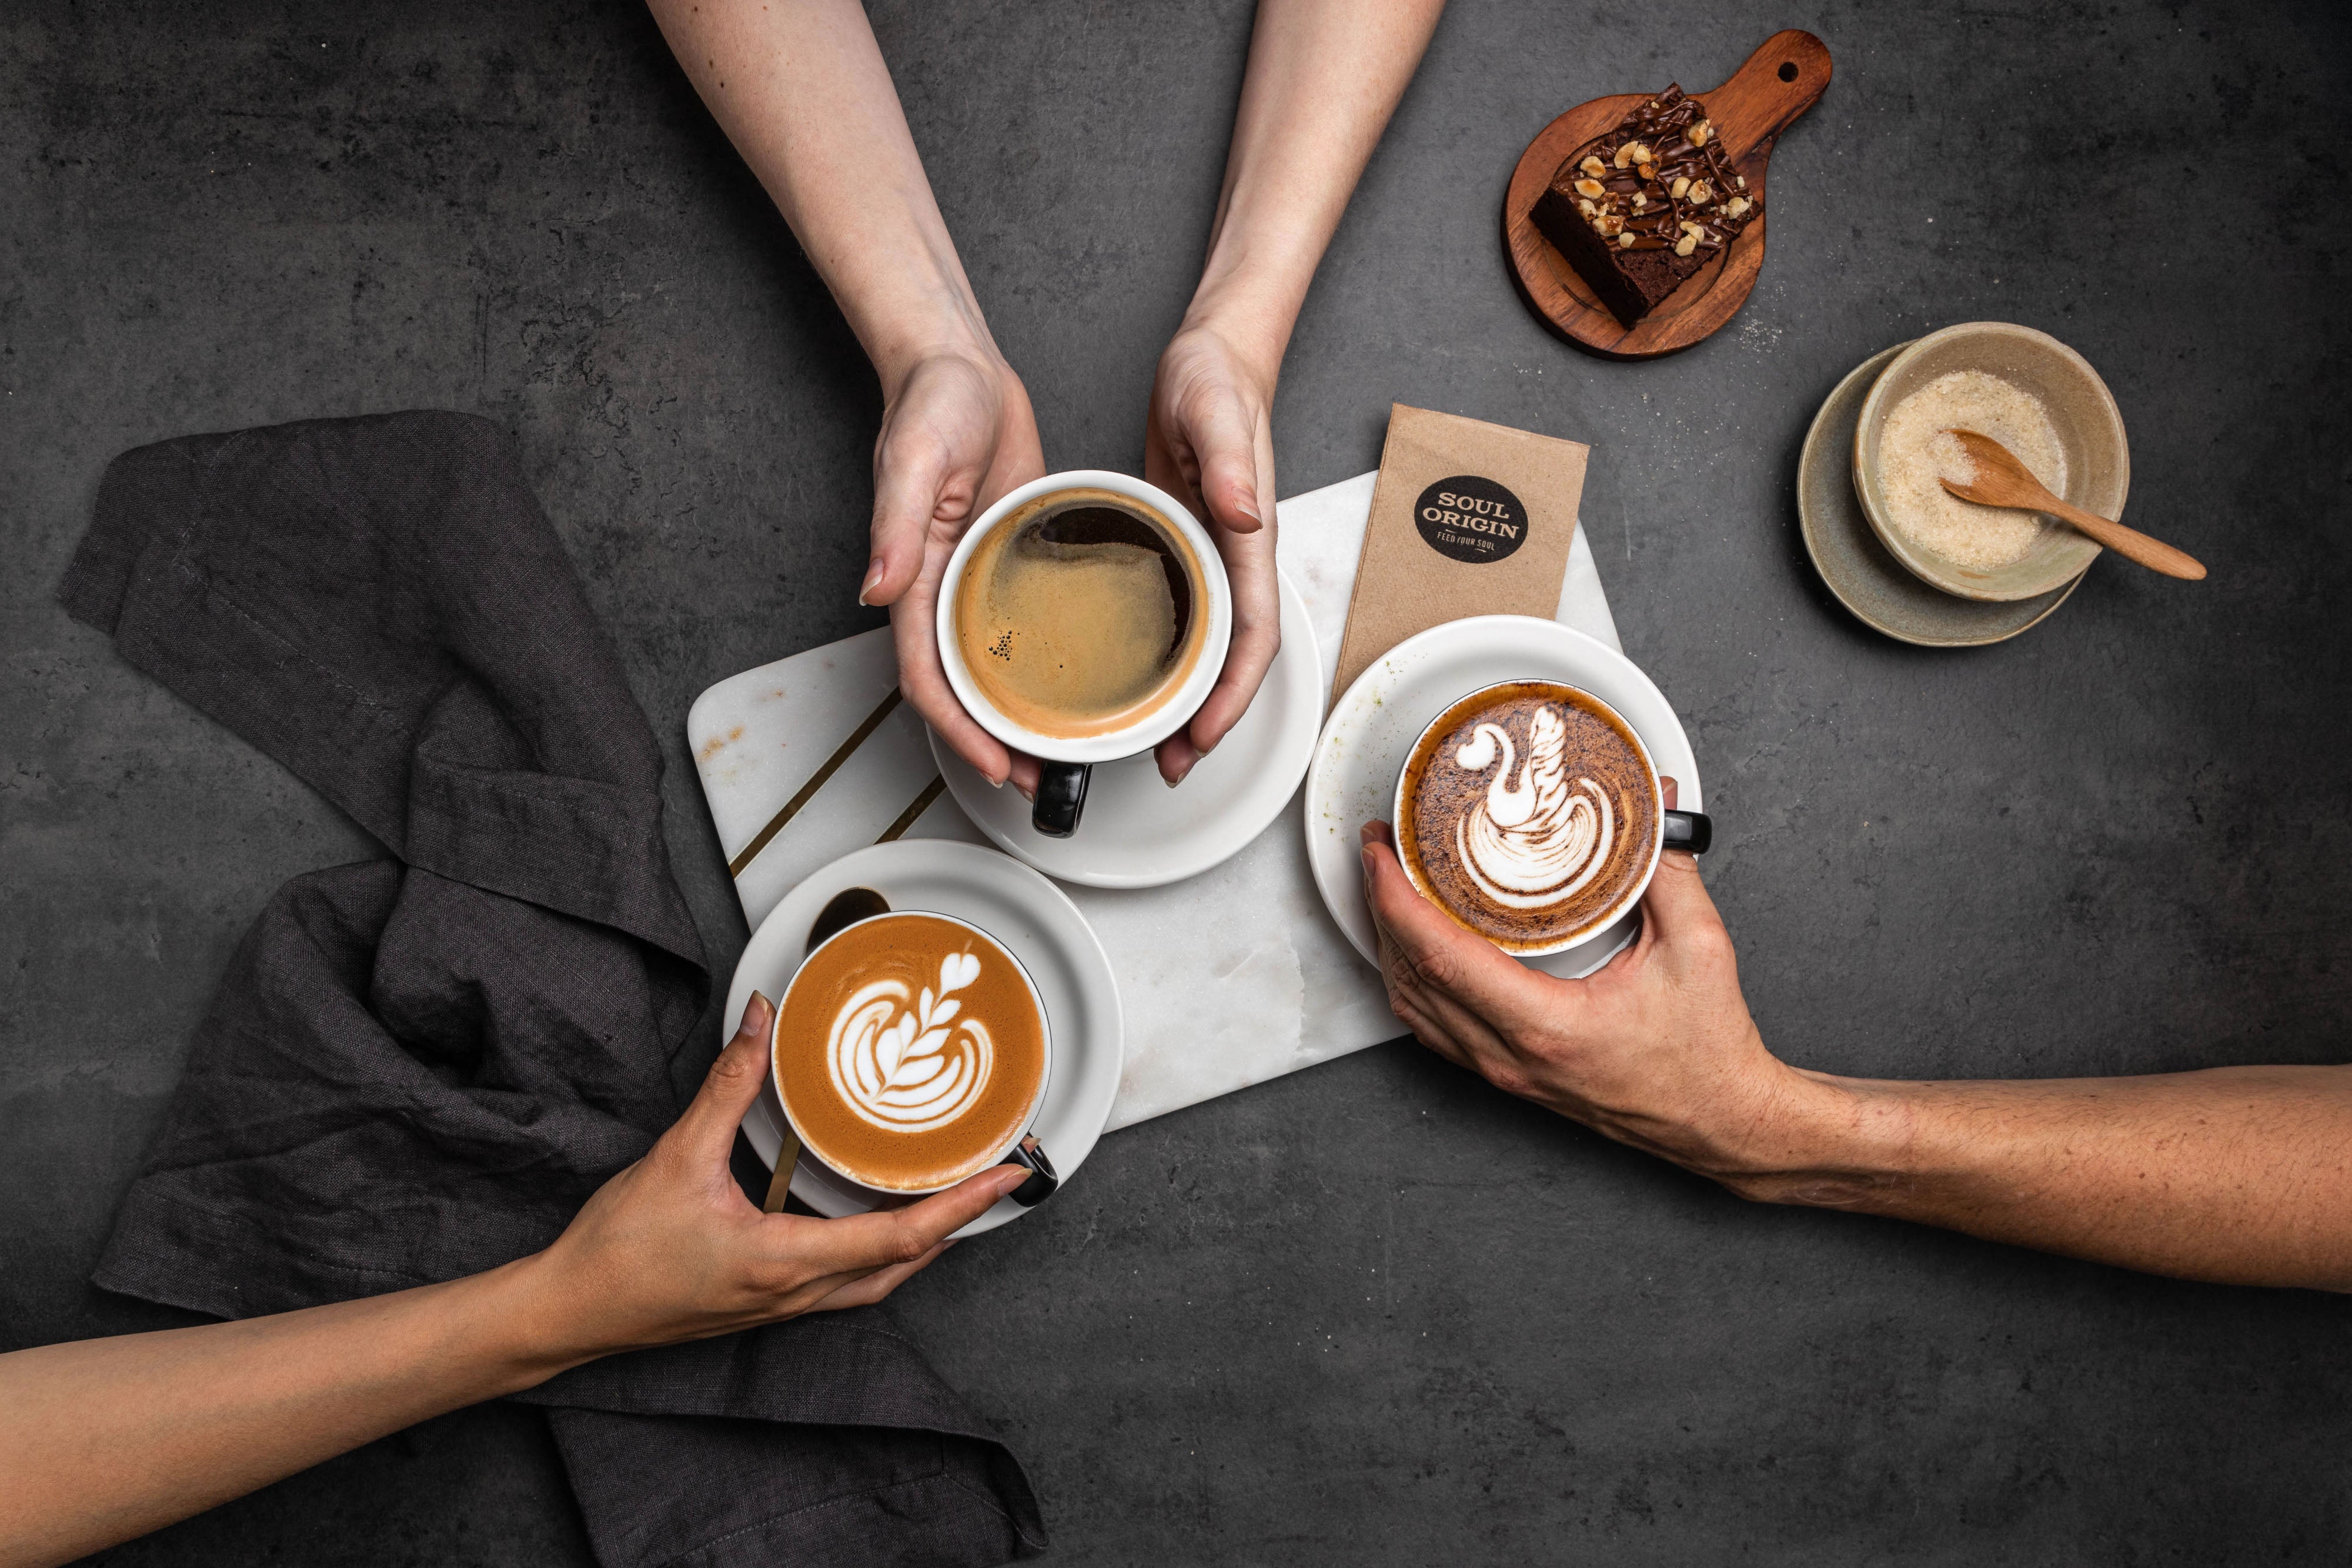 soul origin coffee bean latte flat white cappuccino sharing coffee with friends